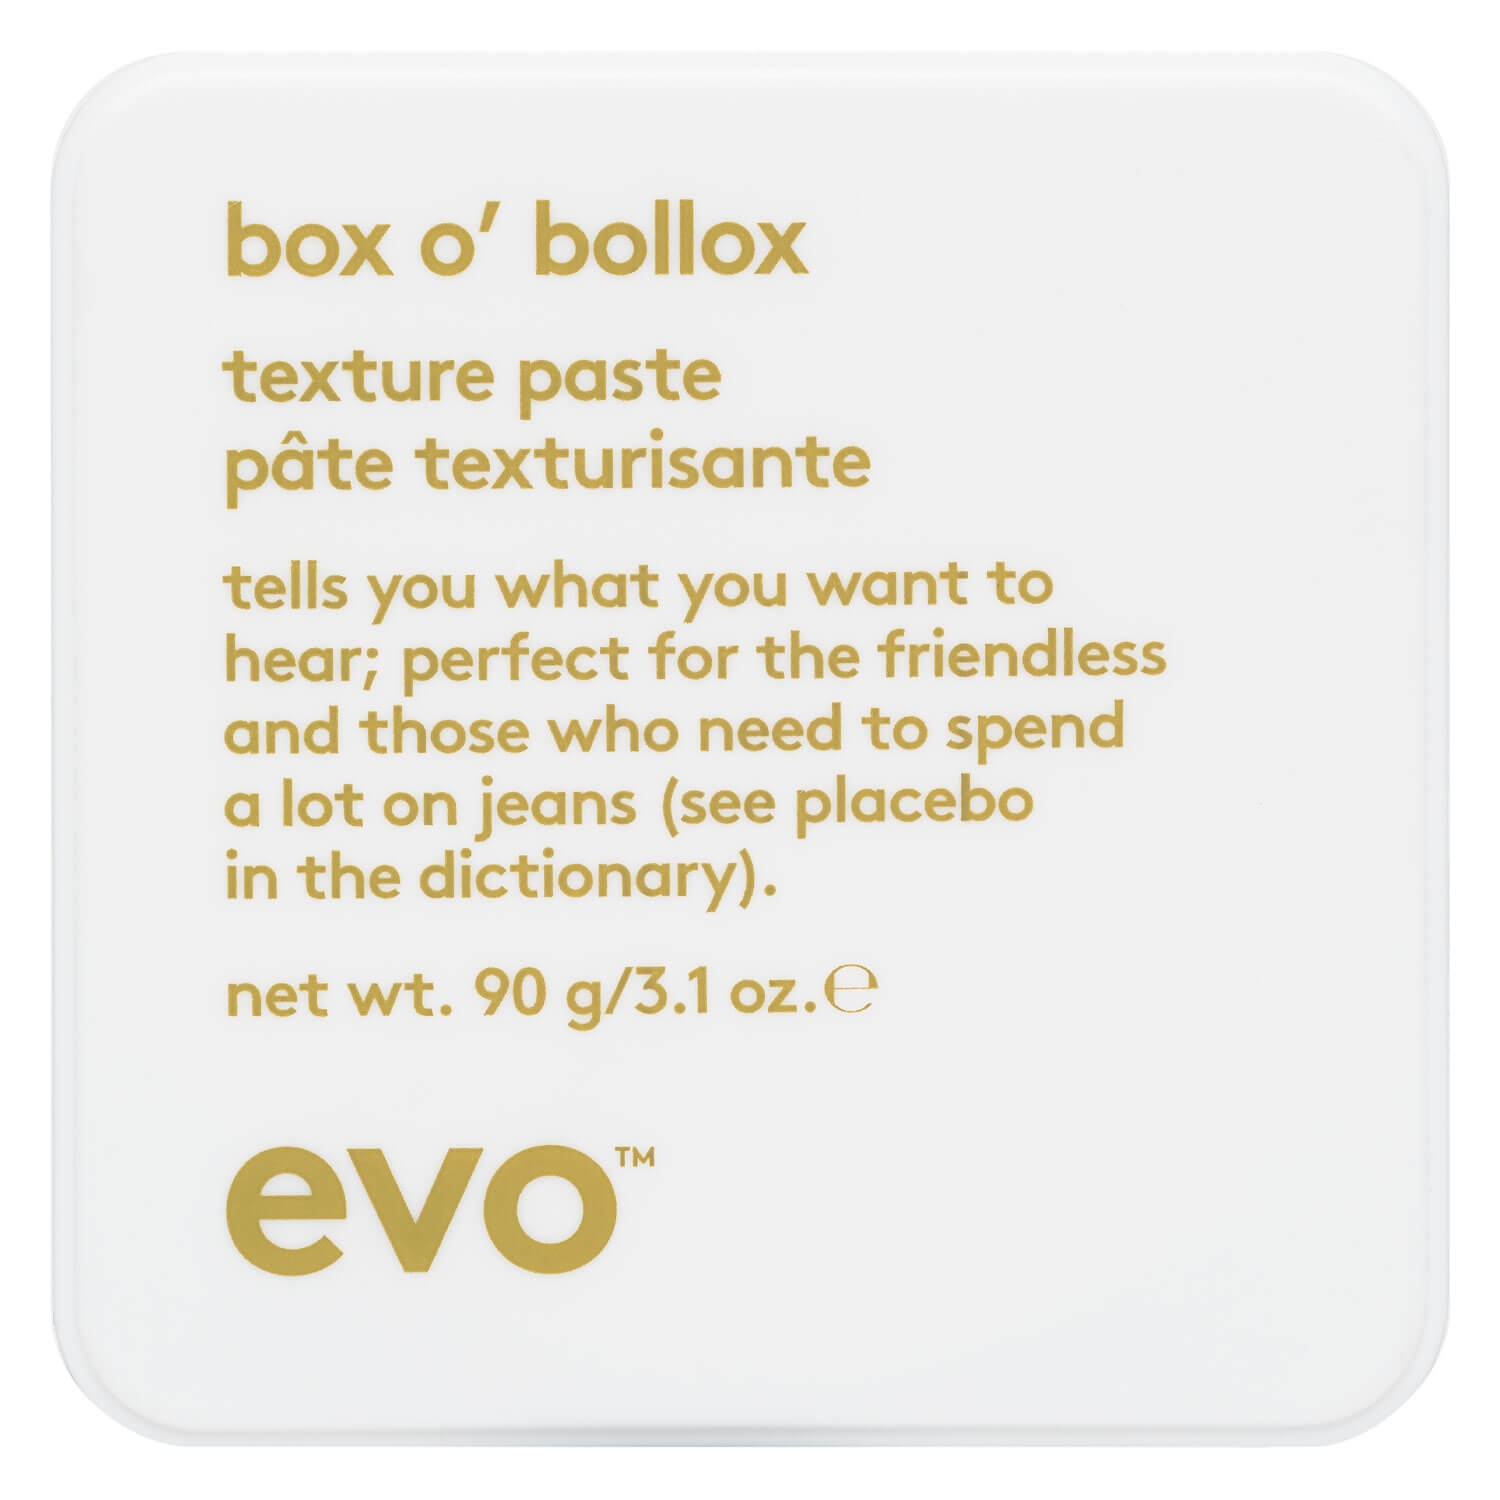 Produktbild von evo style - box o’ bollox texture paste